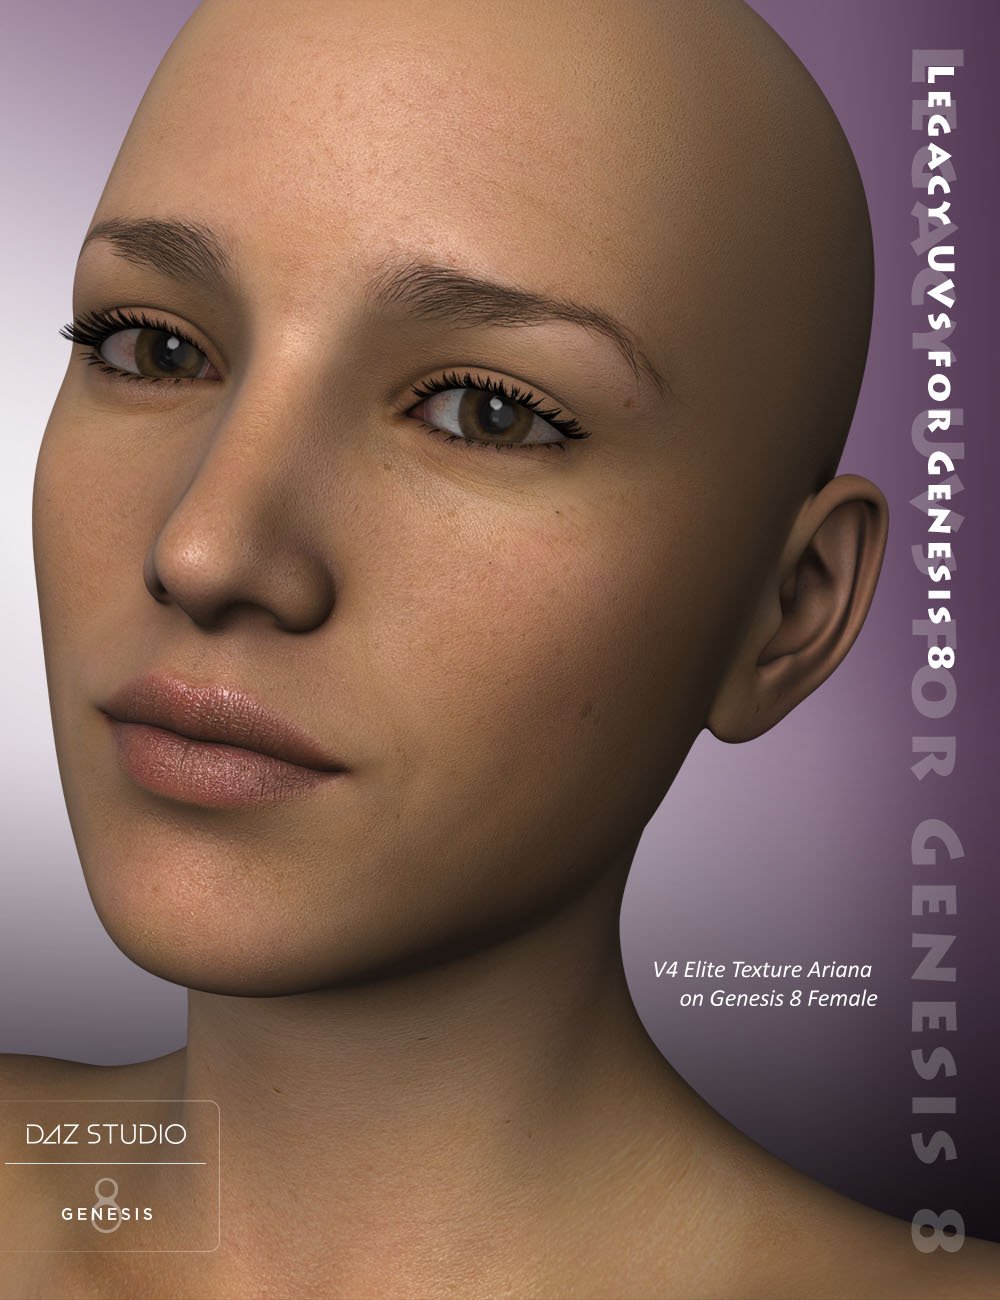 Legacy UVs for Genesis 8: Victoria 4 by: Cayman Studios, 3D Models by Daz 3D